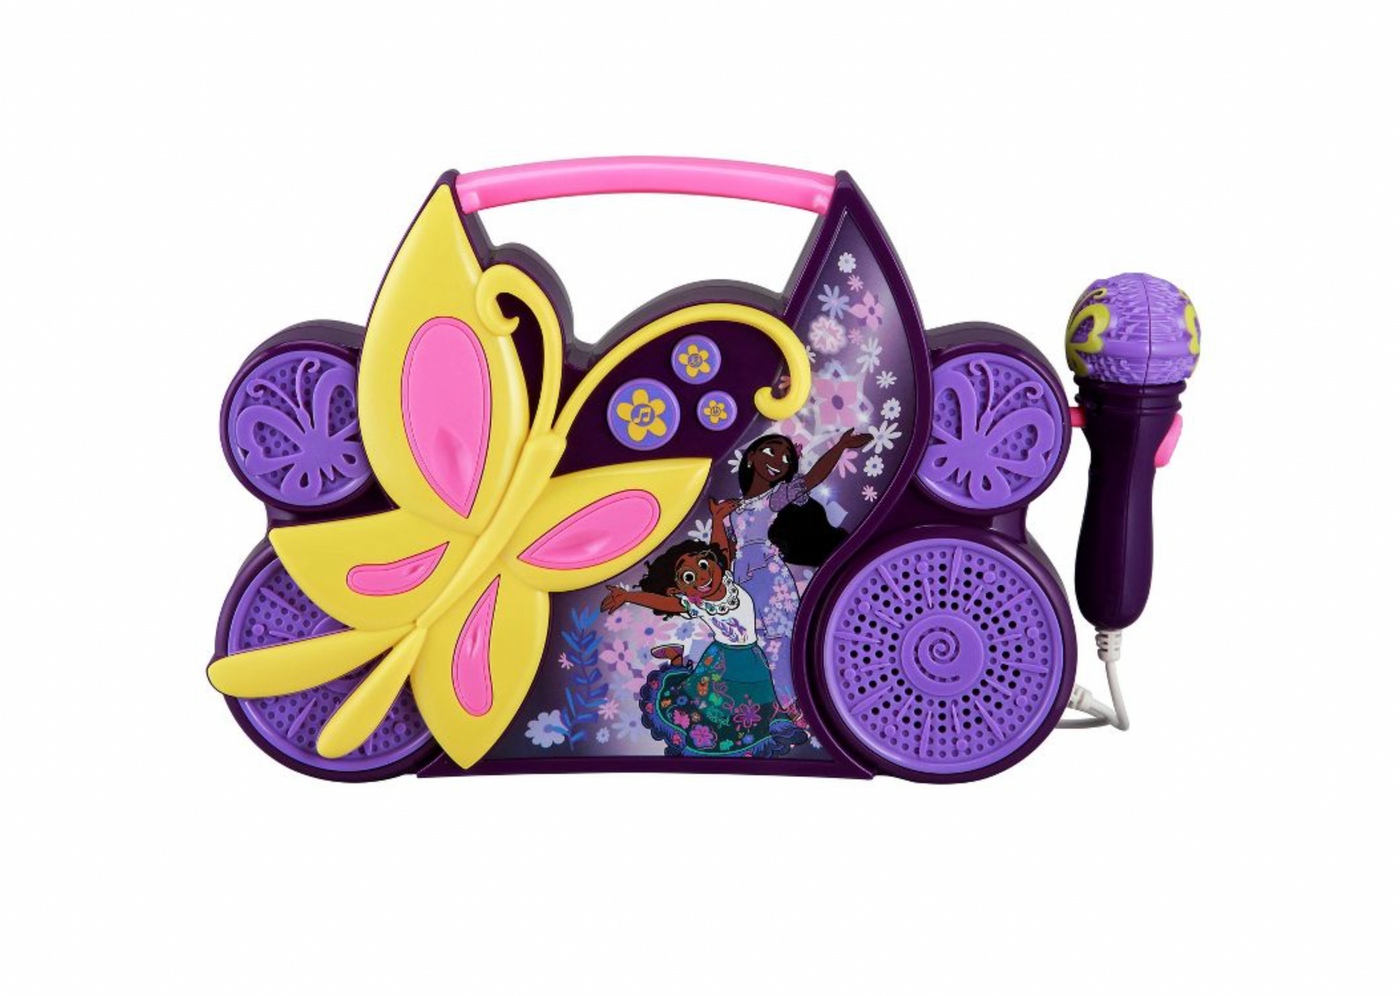 Disney Encanto Mirabel Isabela Sing-Along Boombox Real Working Mic Toy New Box